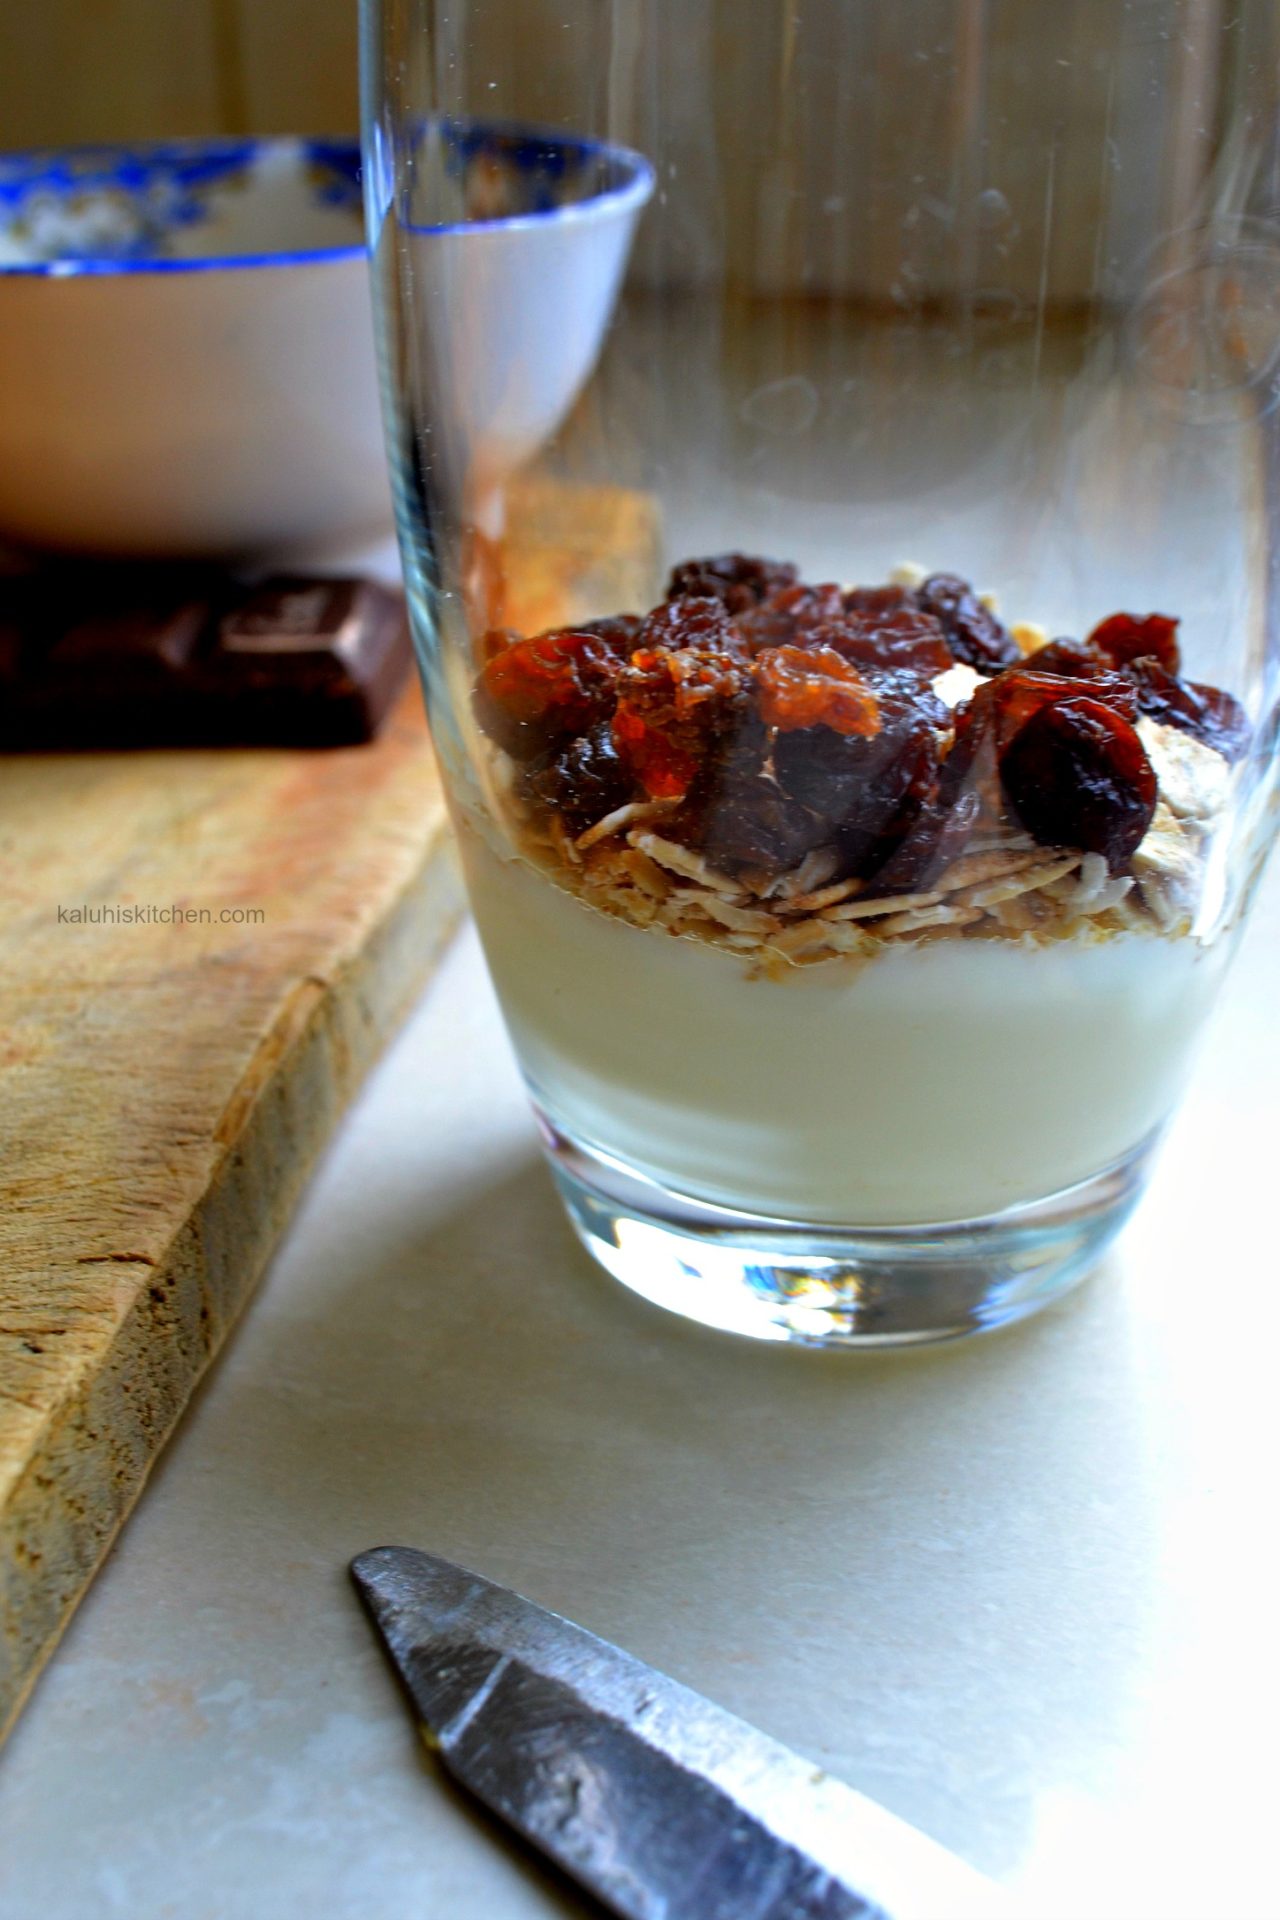 raisins, oata and yoghurt make parfaits very healthy and an ideal snack_mango and dark chocolate parfait_kaluhiskitchen.com